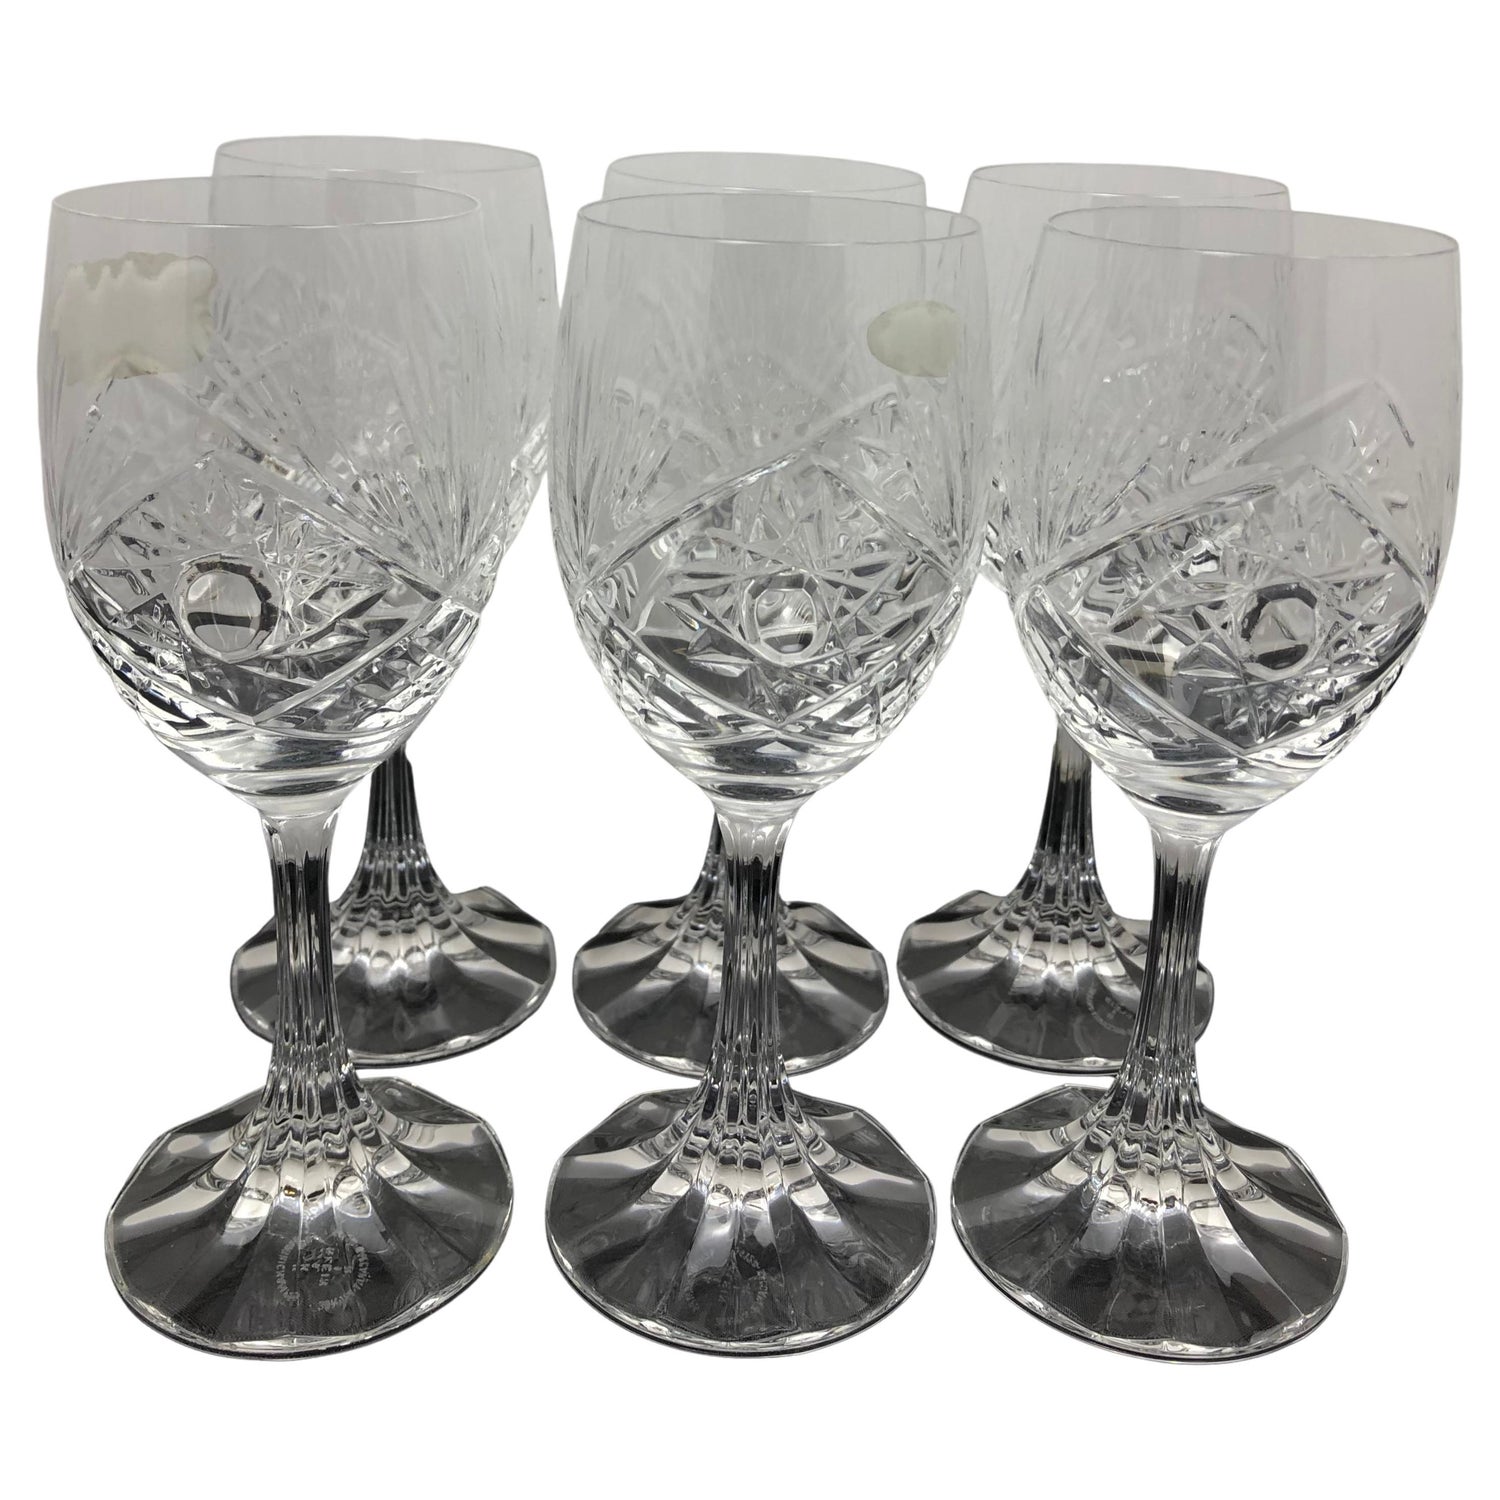 https://a.1stdibscdn.com/stunning-set-of-6-baccarat-crystal-white-wine-glasses-for-sale/f_40821/f_263218321638205836351/f_26321832_1638205837661_bg_processed.jpg?width=1500